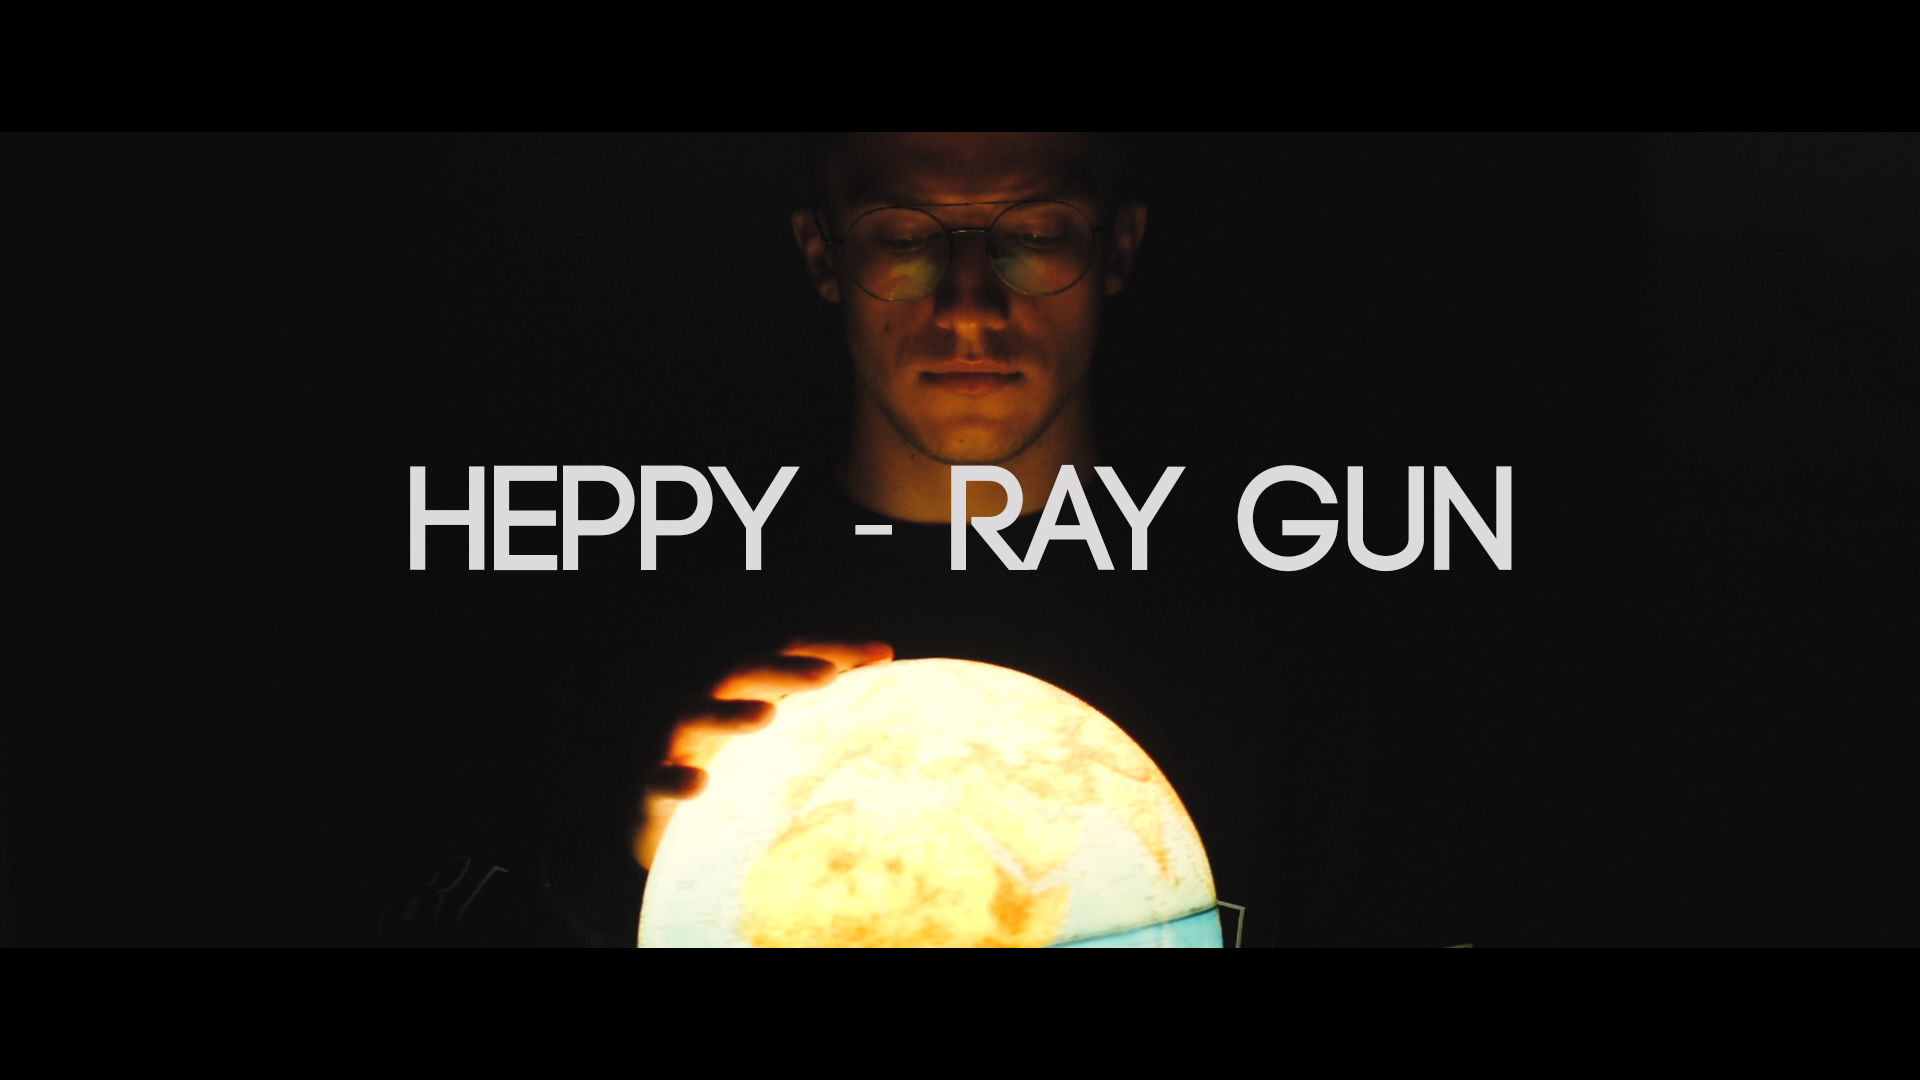 Heppy – Ray Gun